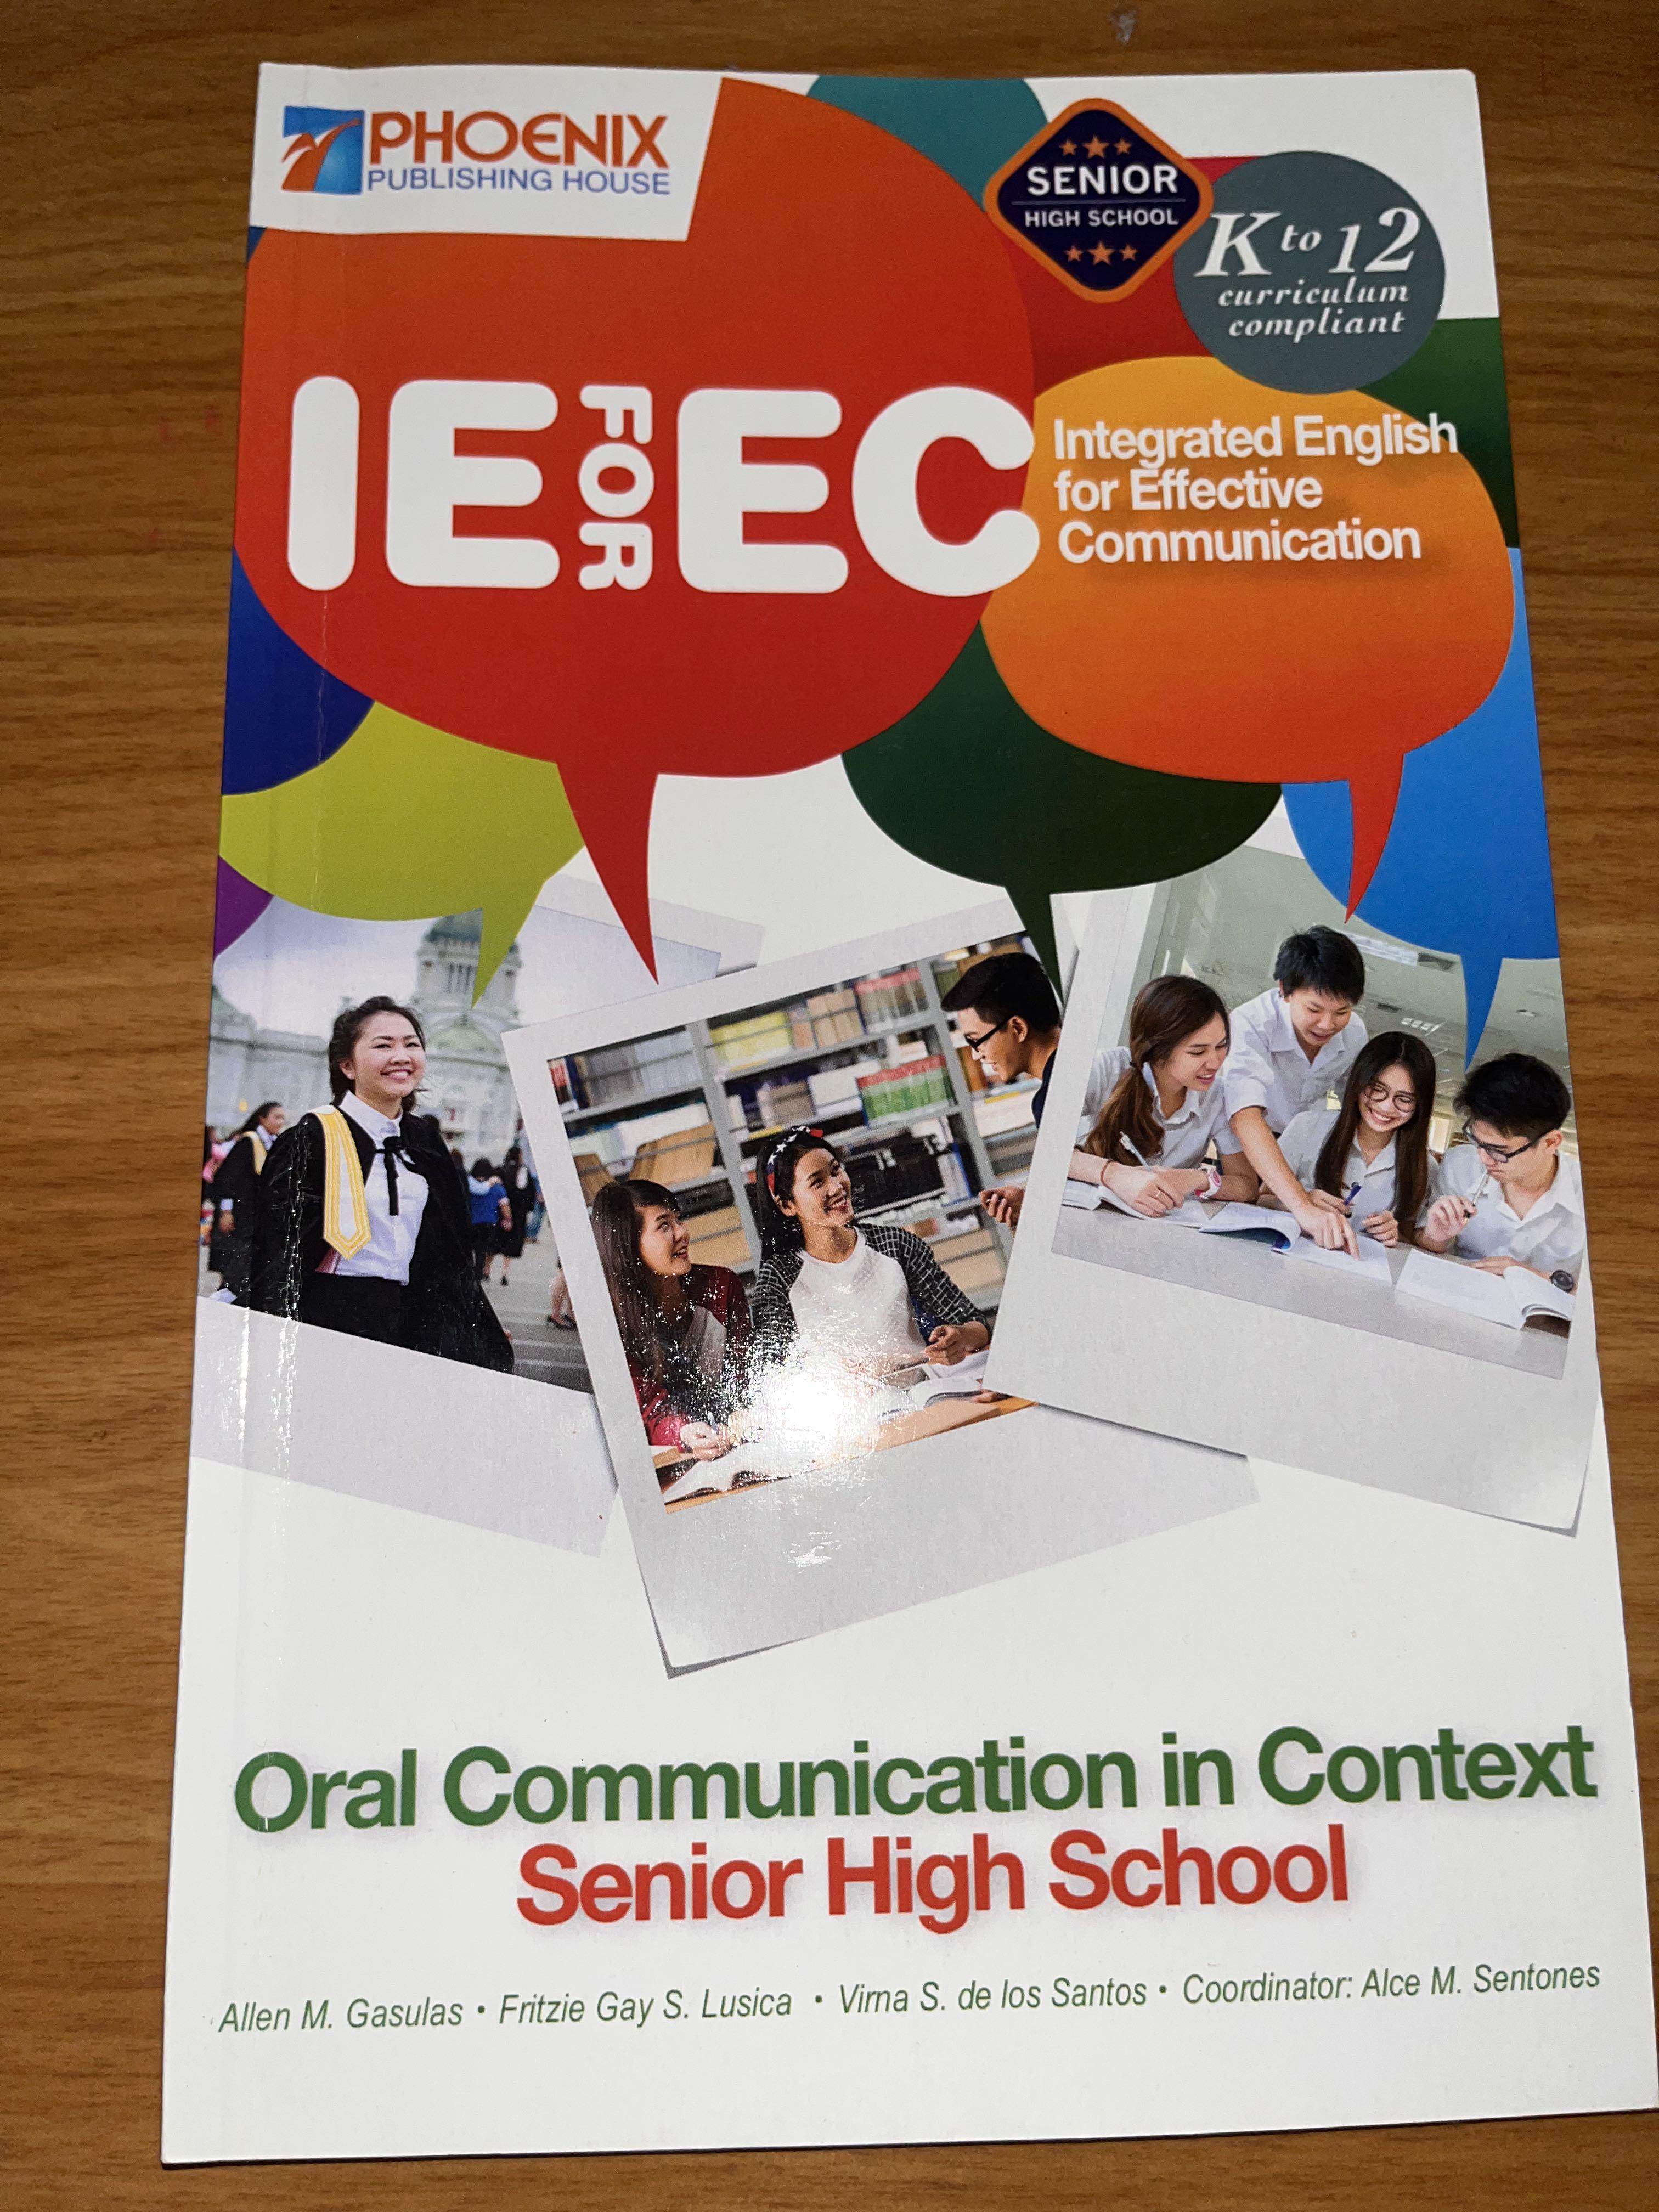 oral communication grade 11 essay